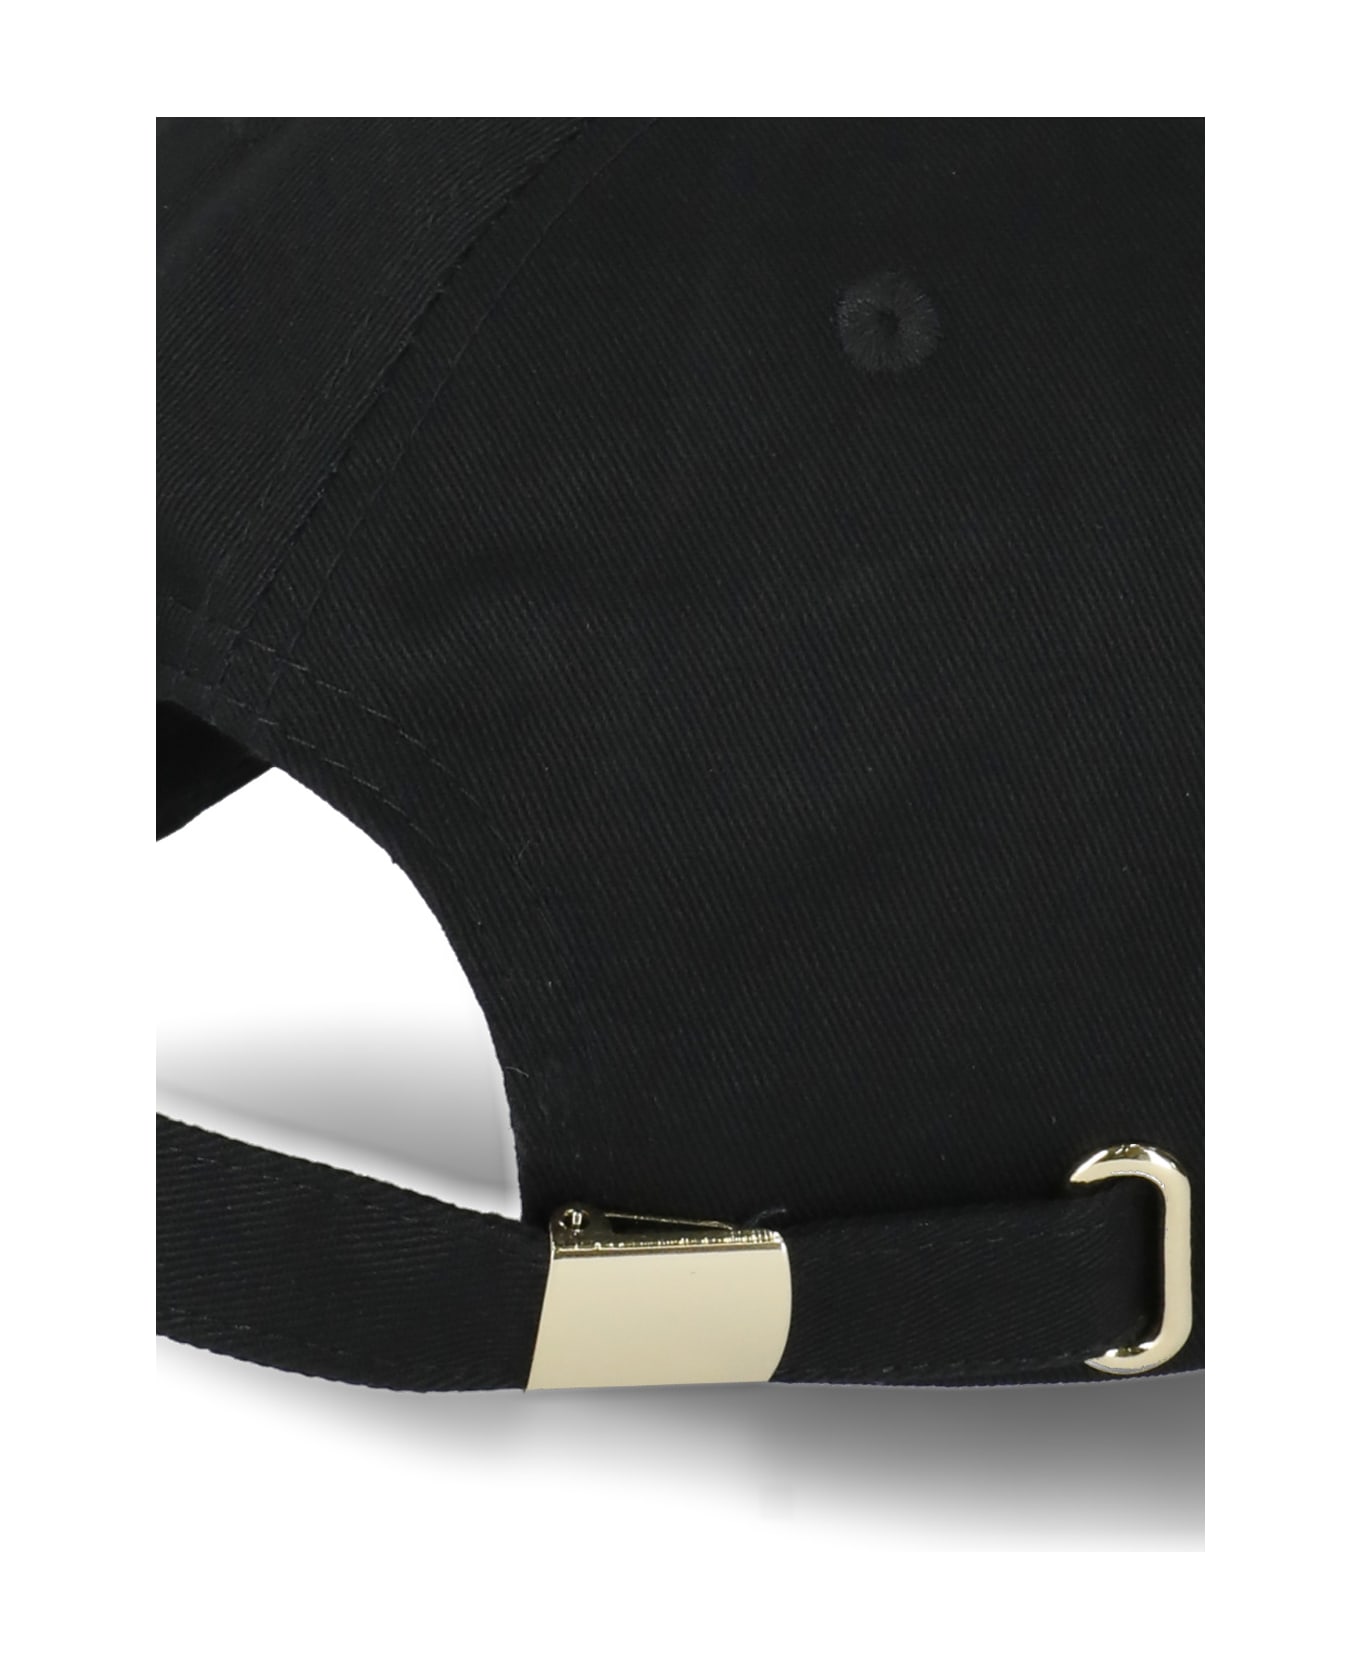 Versace Jeans Couture Baseball Cap With Vemblem Logo - Black 帽子